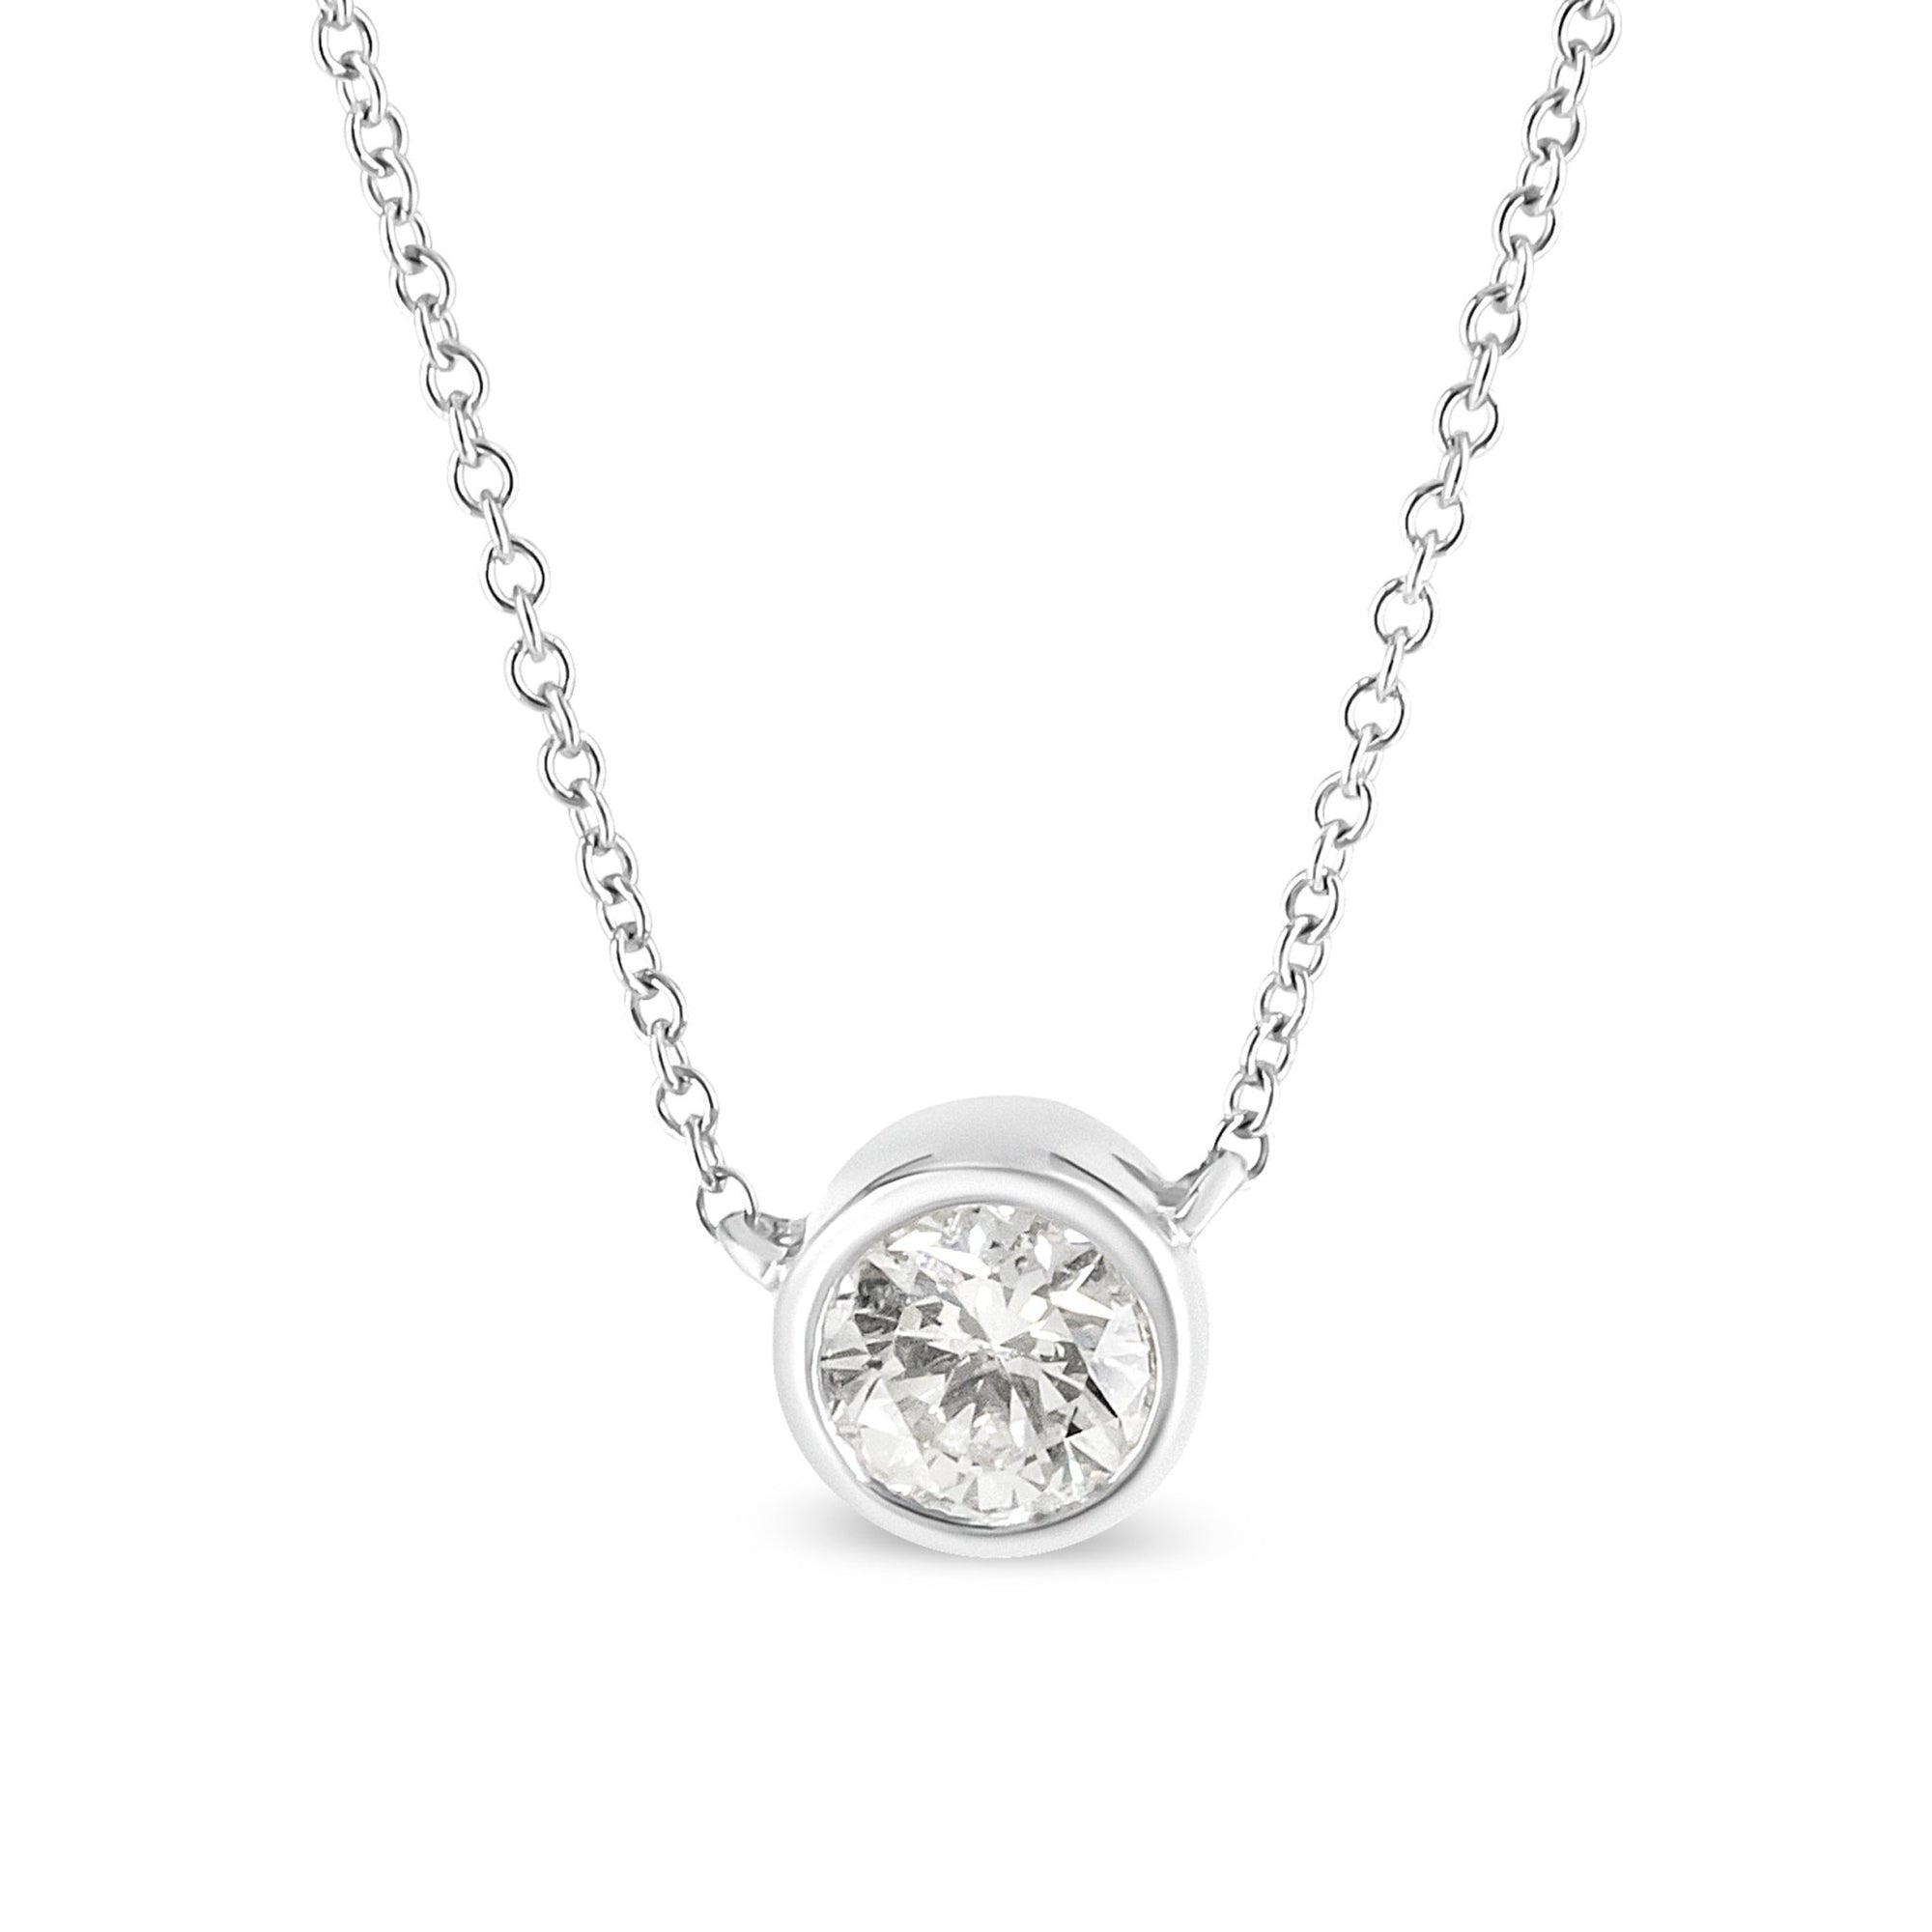 10K White Gold 1/3 Cttw Round Bezel-Set Diamond Solitaire Pendant Necklace (I-J Color, I1-I2 Clarity) - Adjustable 16-18" - LinkagejewelrydesignLinkagejewelrydesign